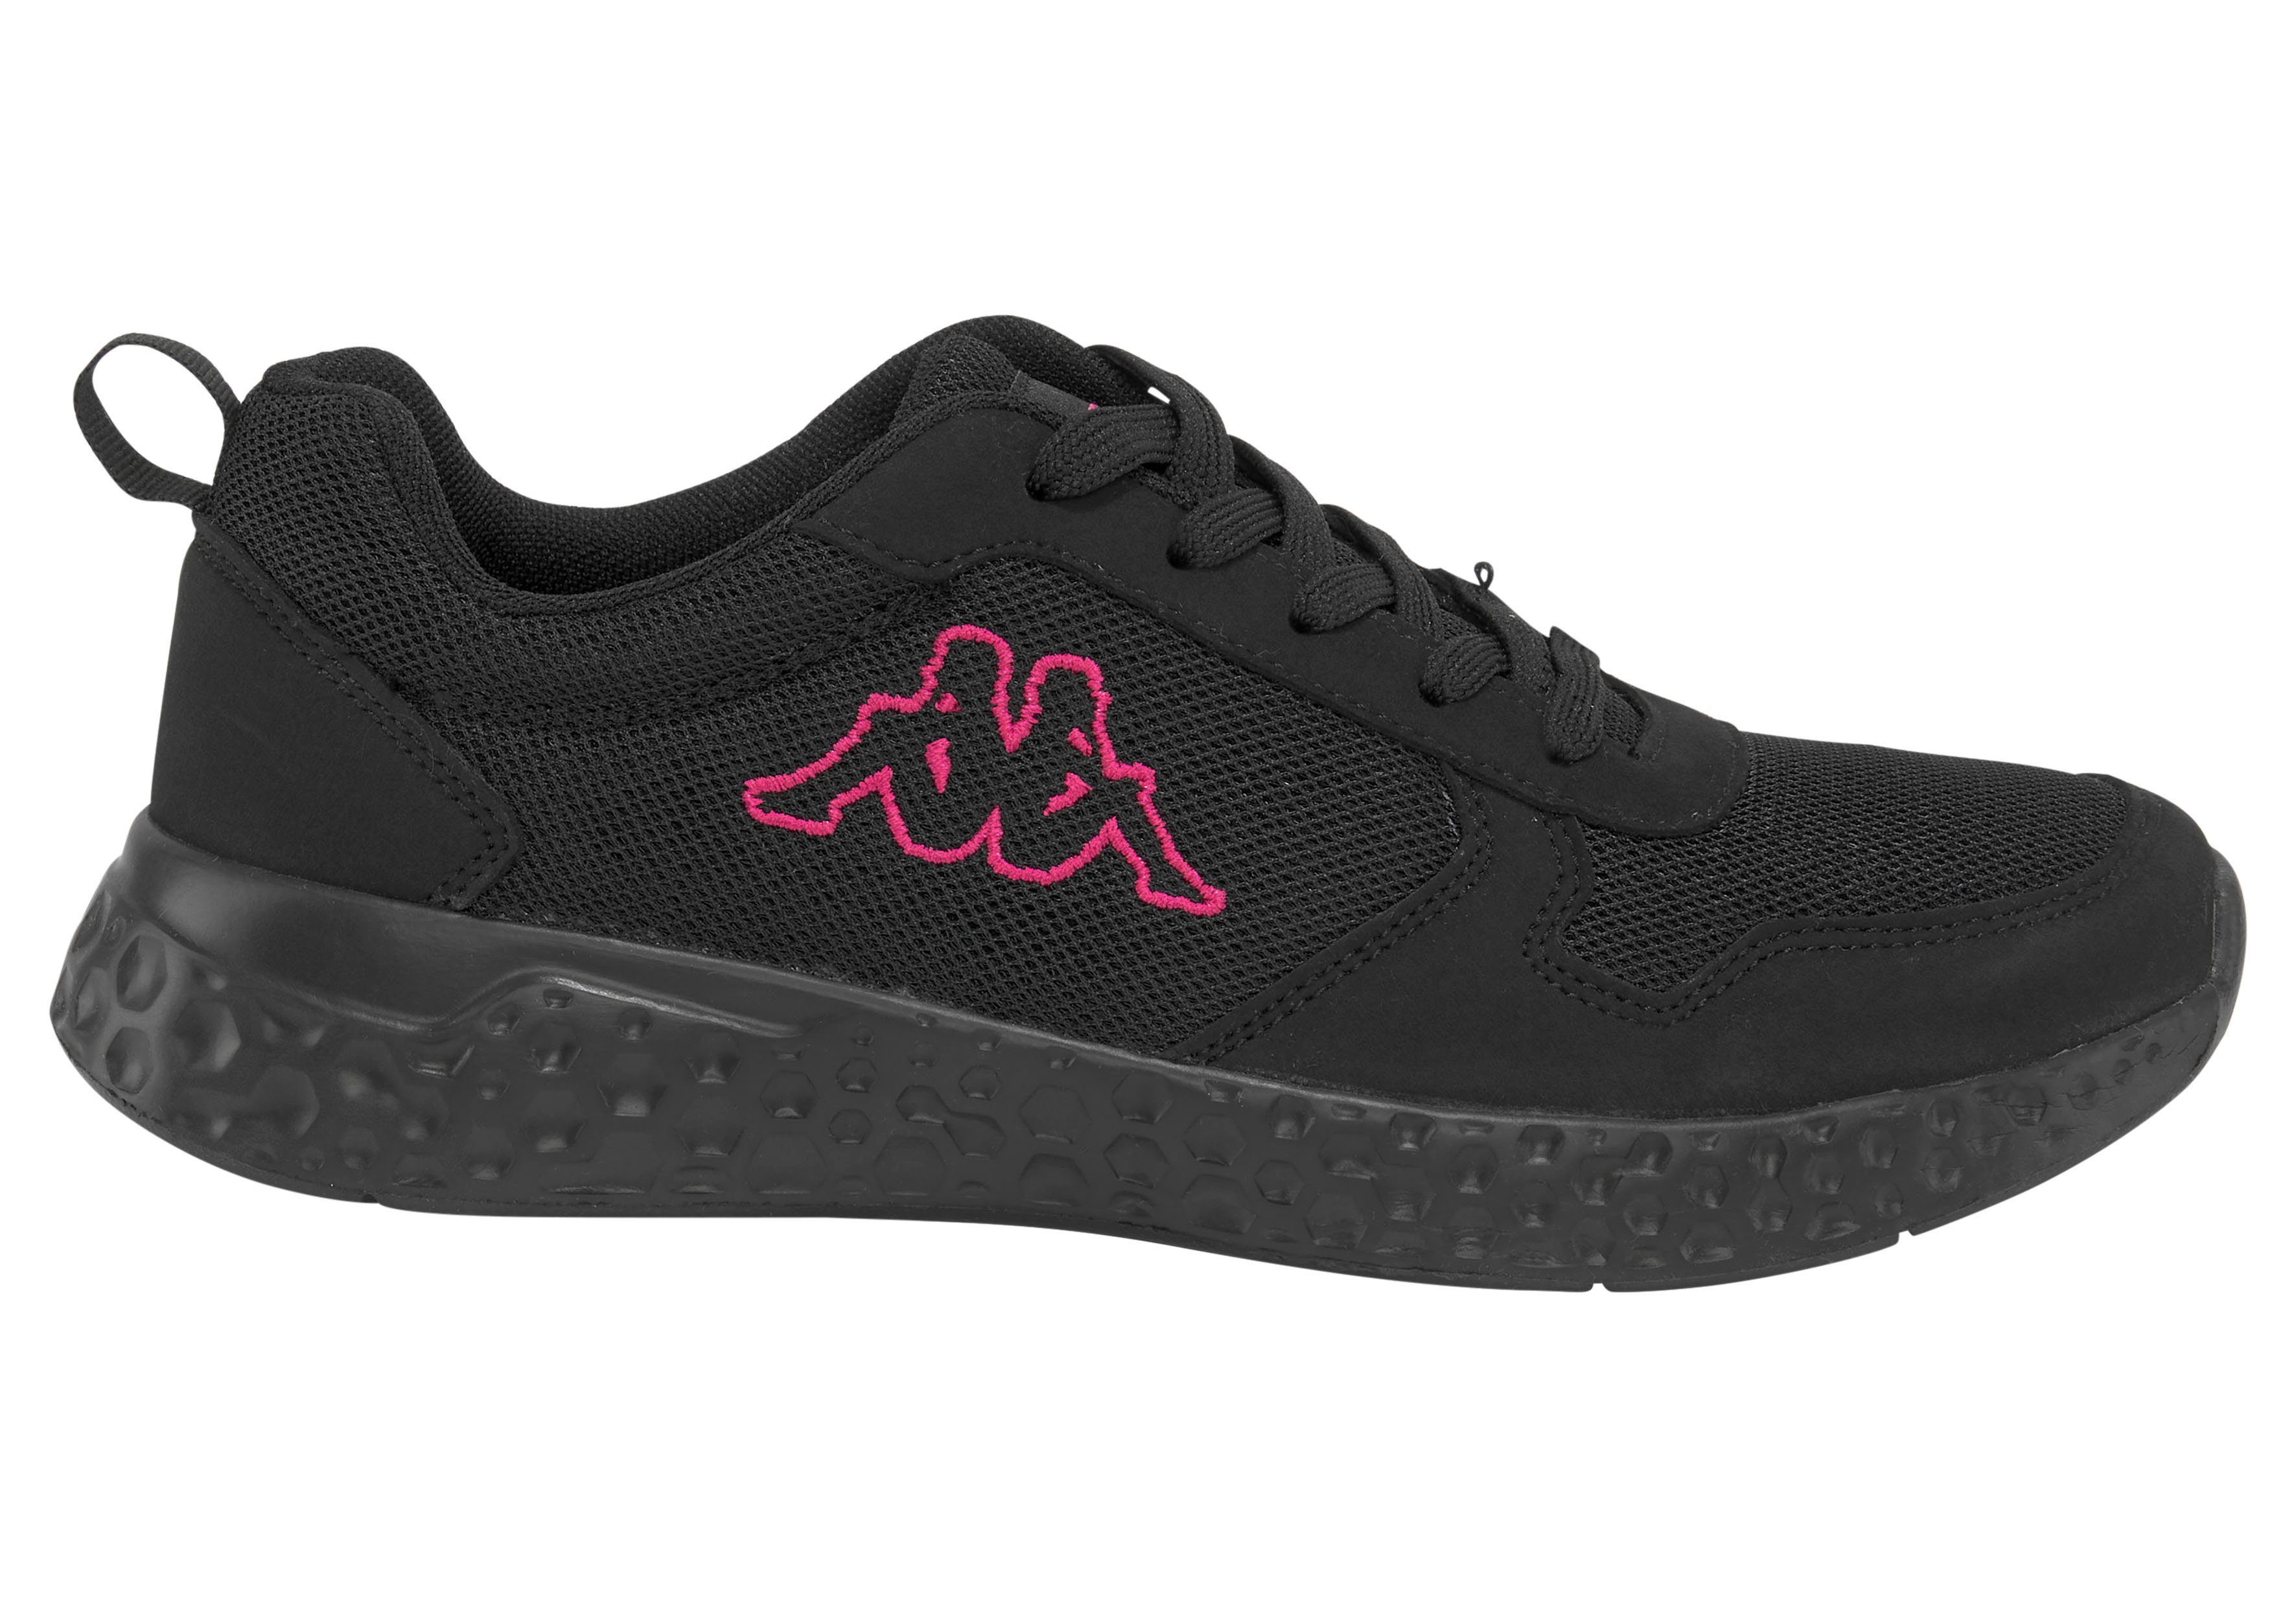 schwarz-pink Kappa Sneaker